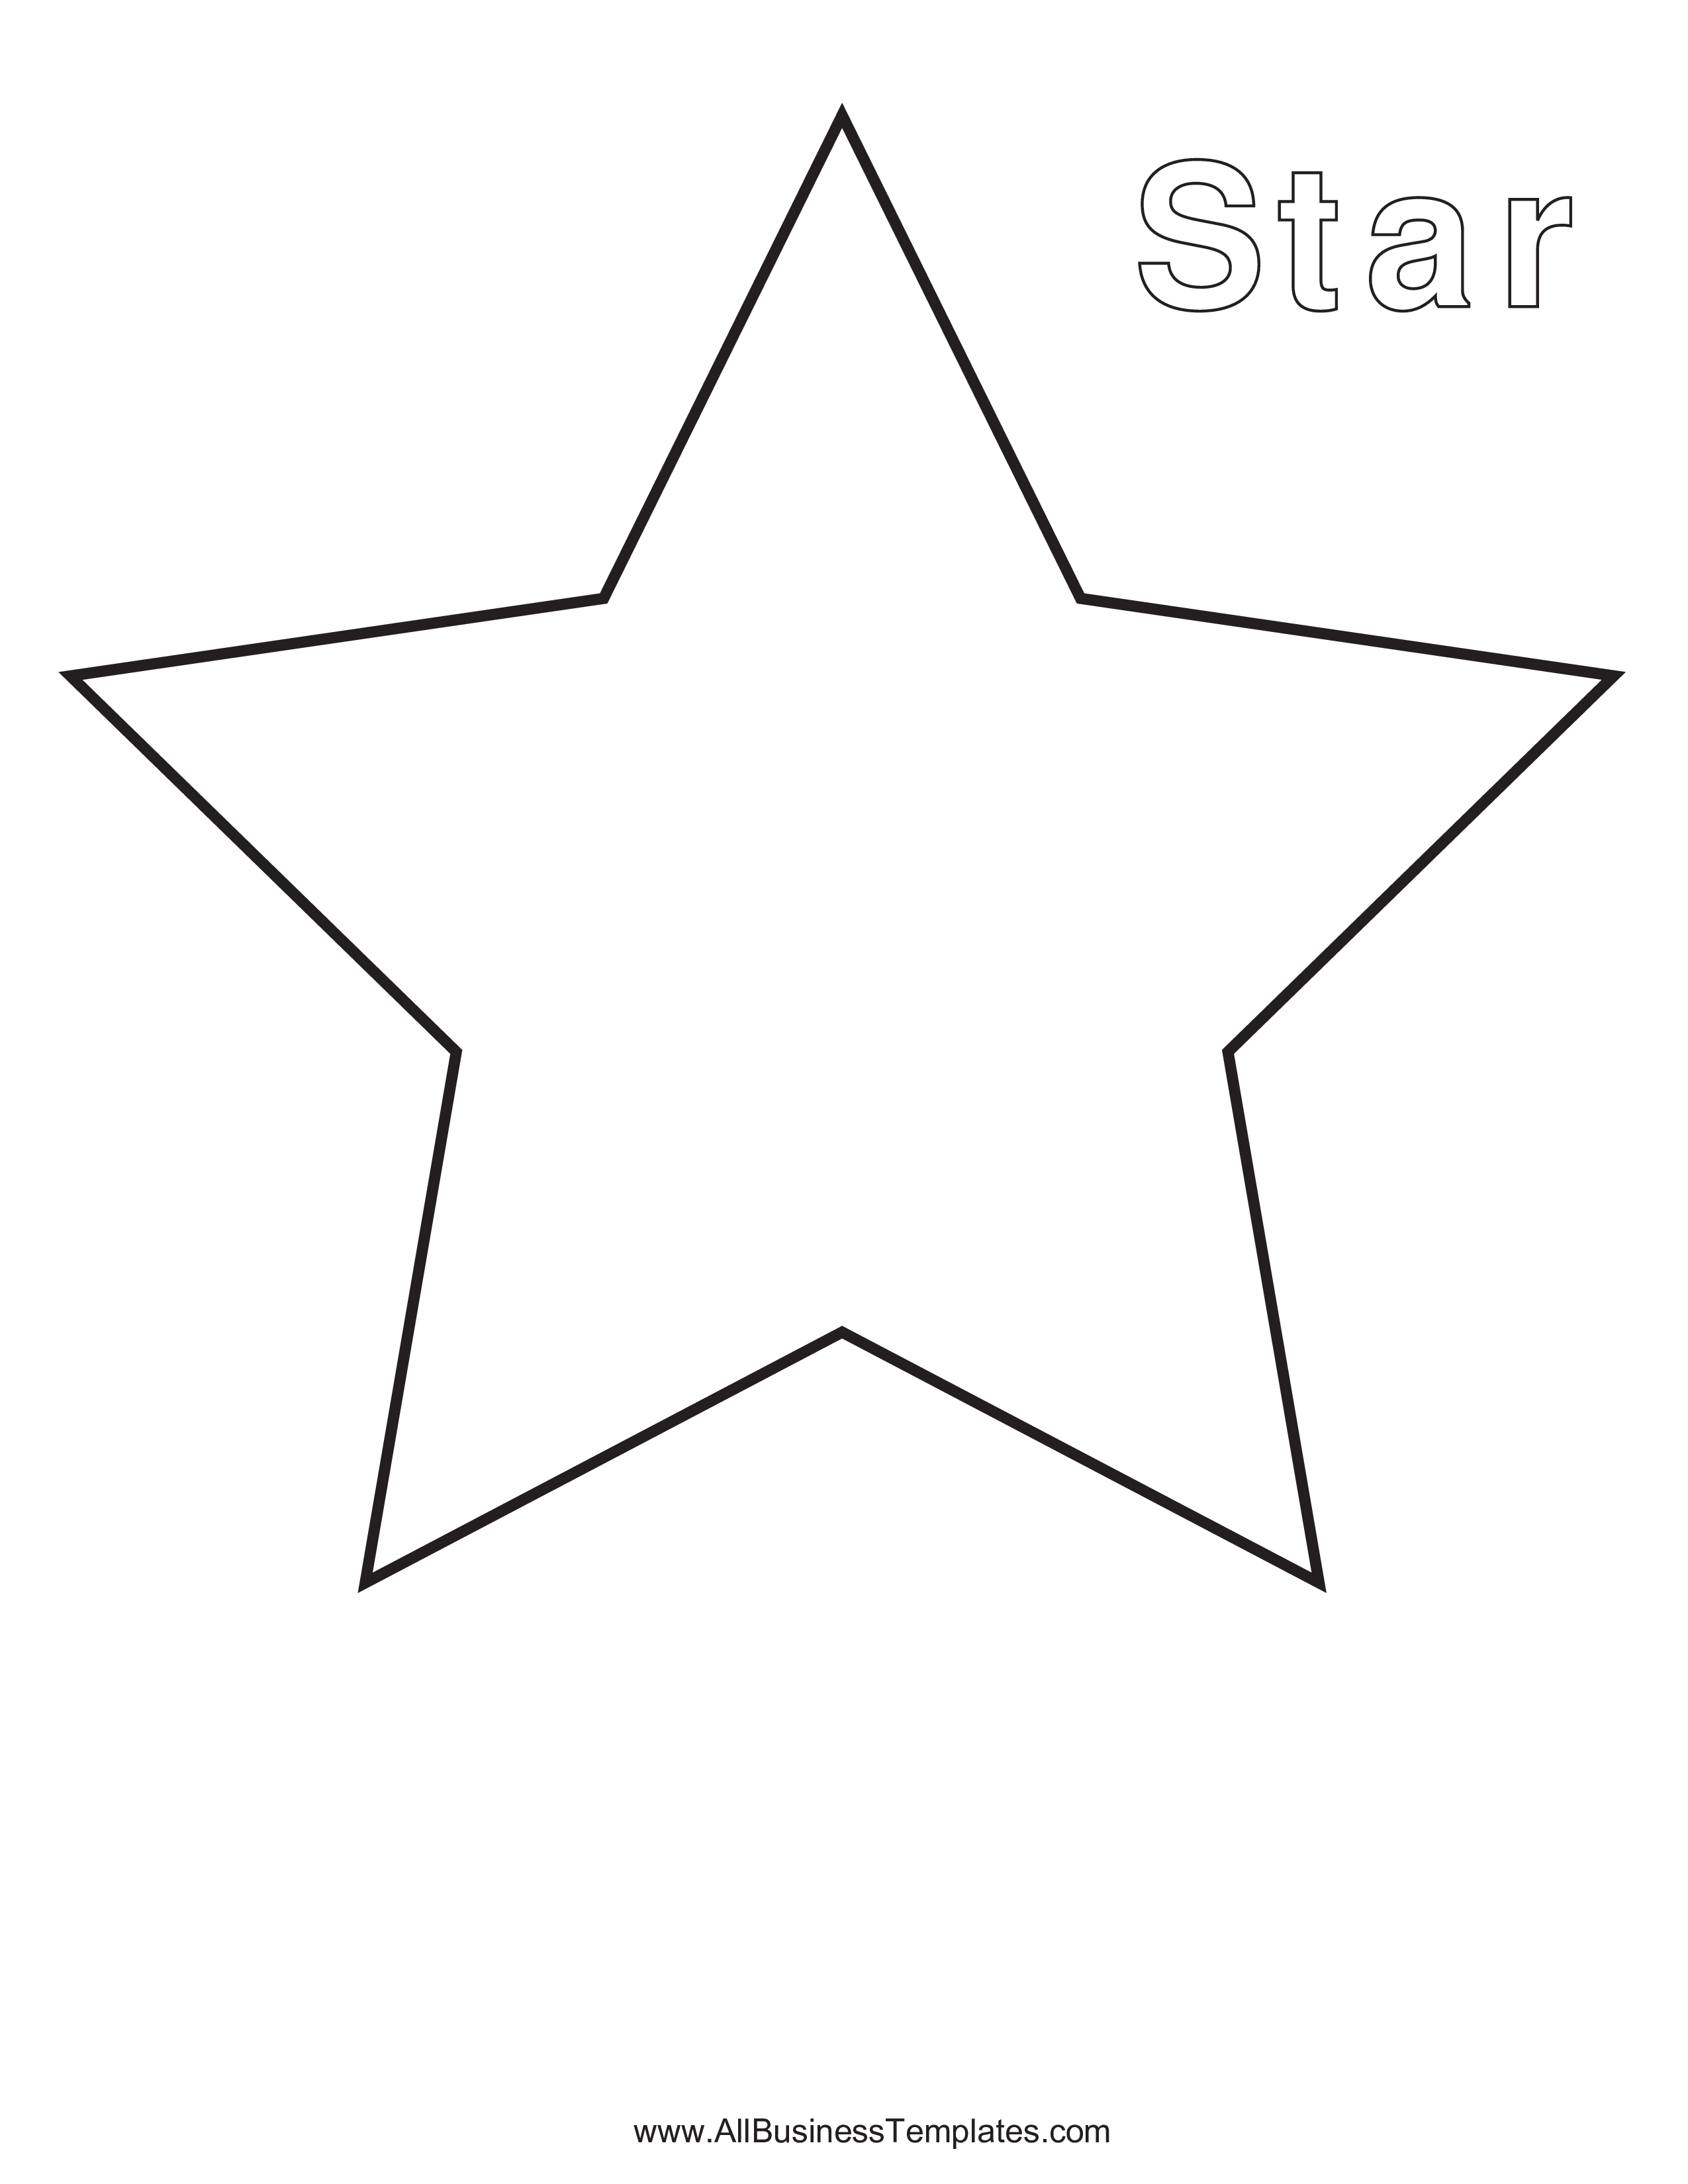 Simple Star Template main image